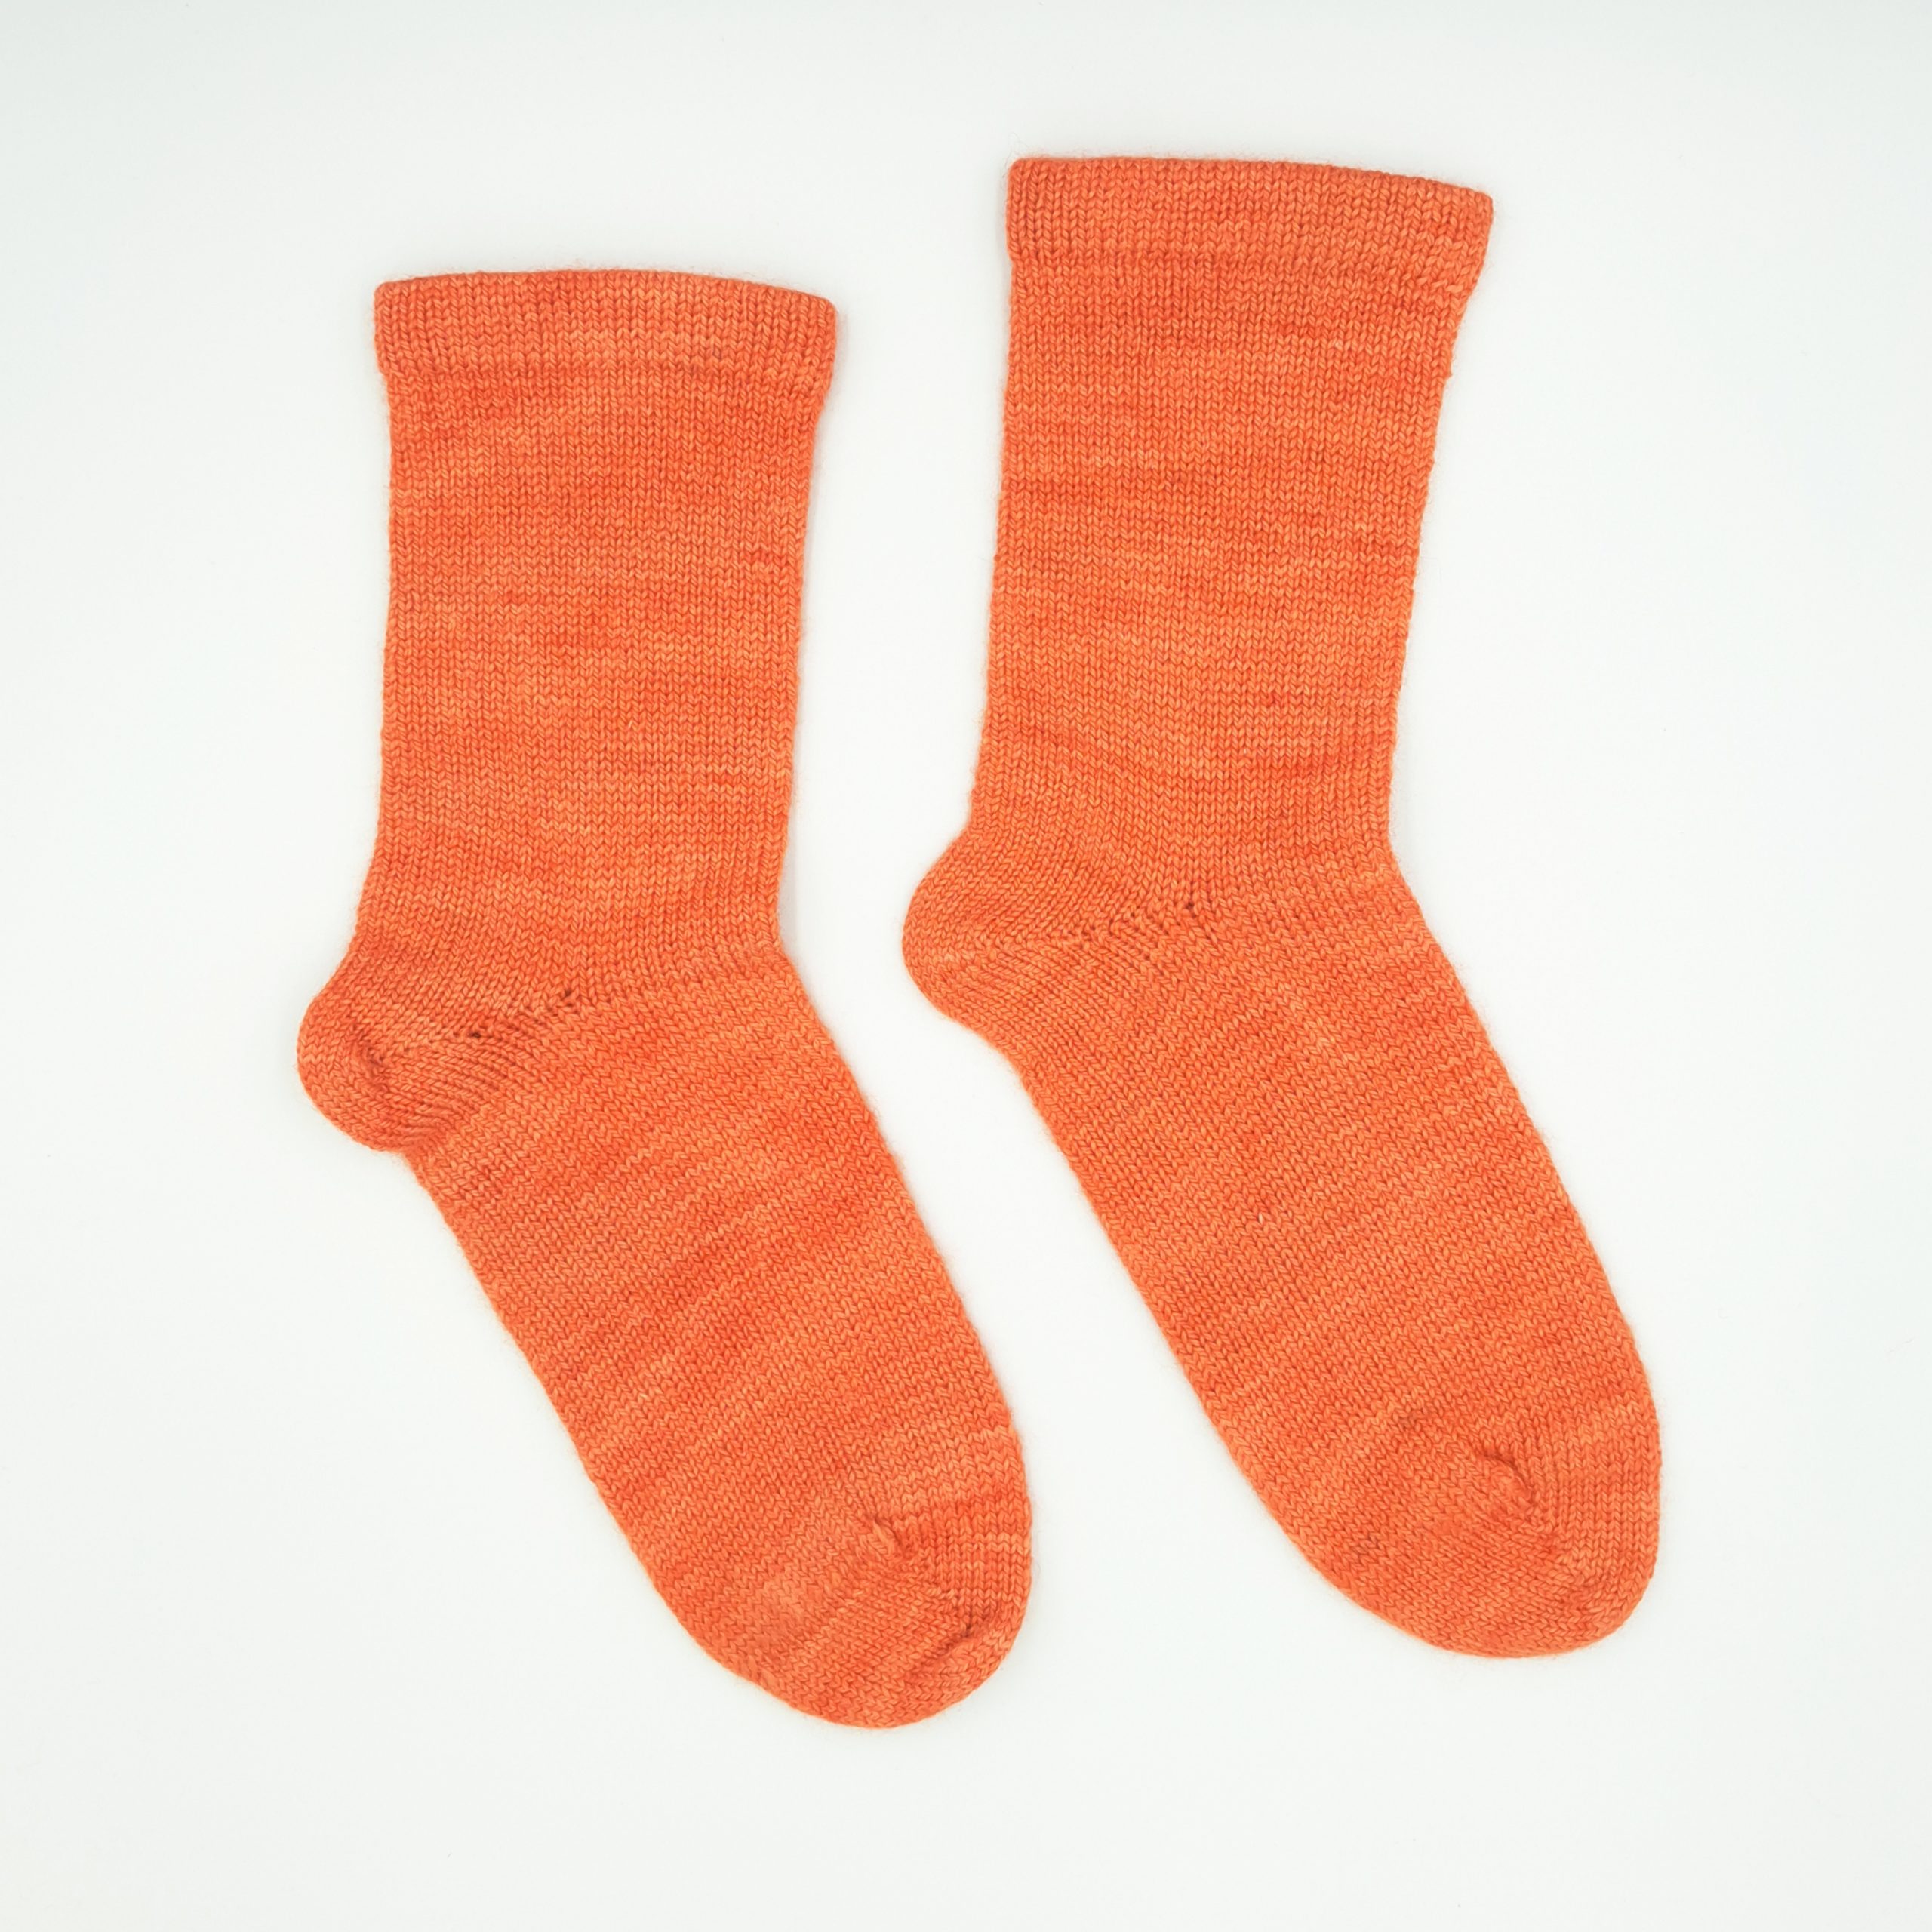 hand crafted silky socks in warm orange : Misterstiltskin